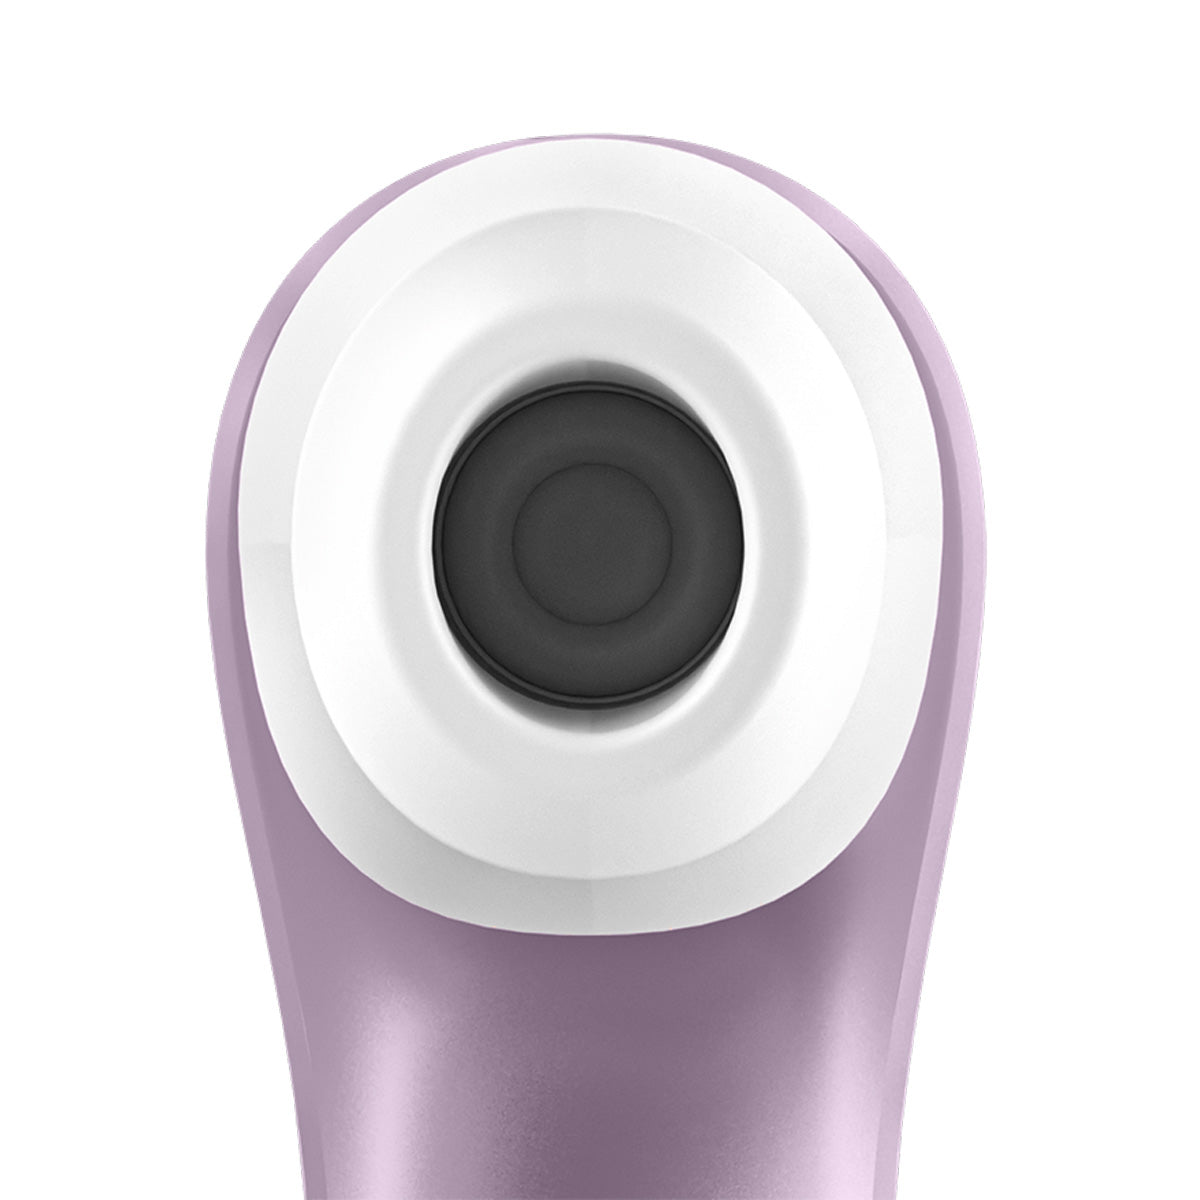 Satisfyer - Pro 2 Next Generation - Air Pulse Stimulator - Violet